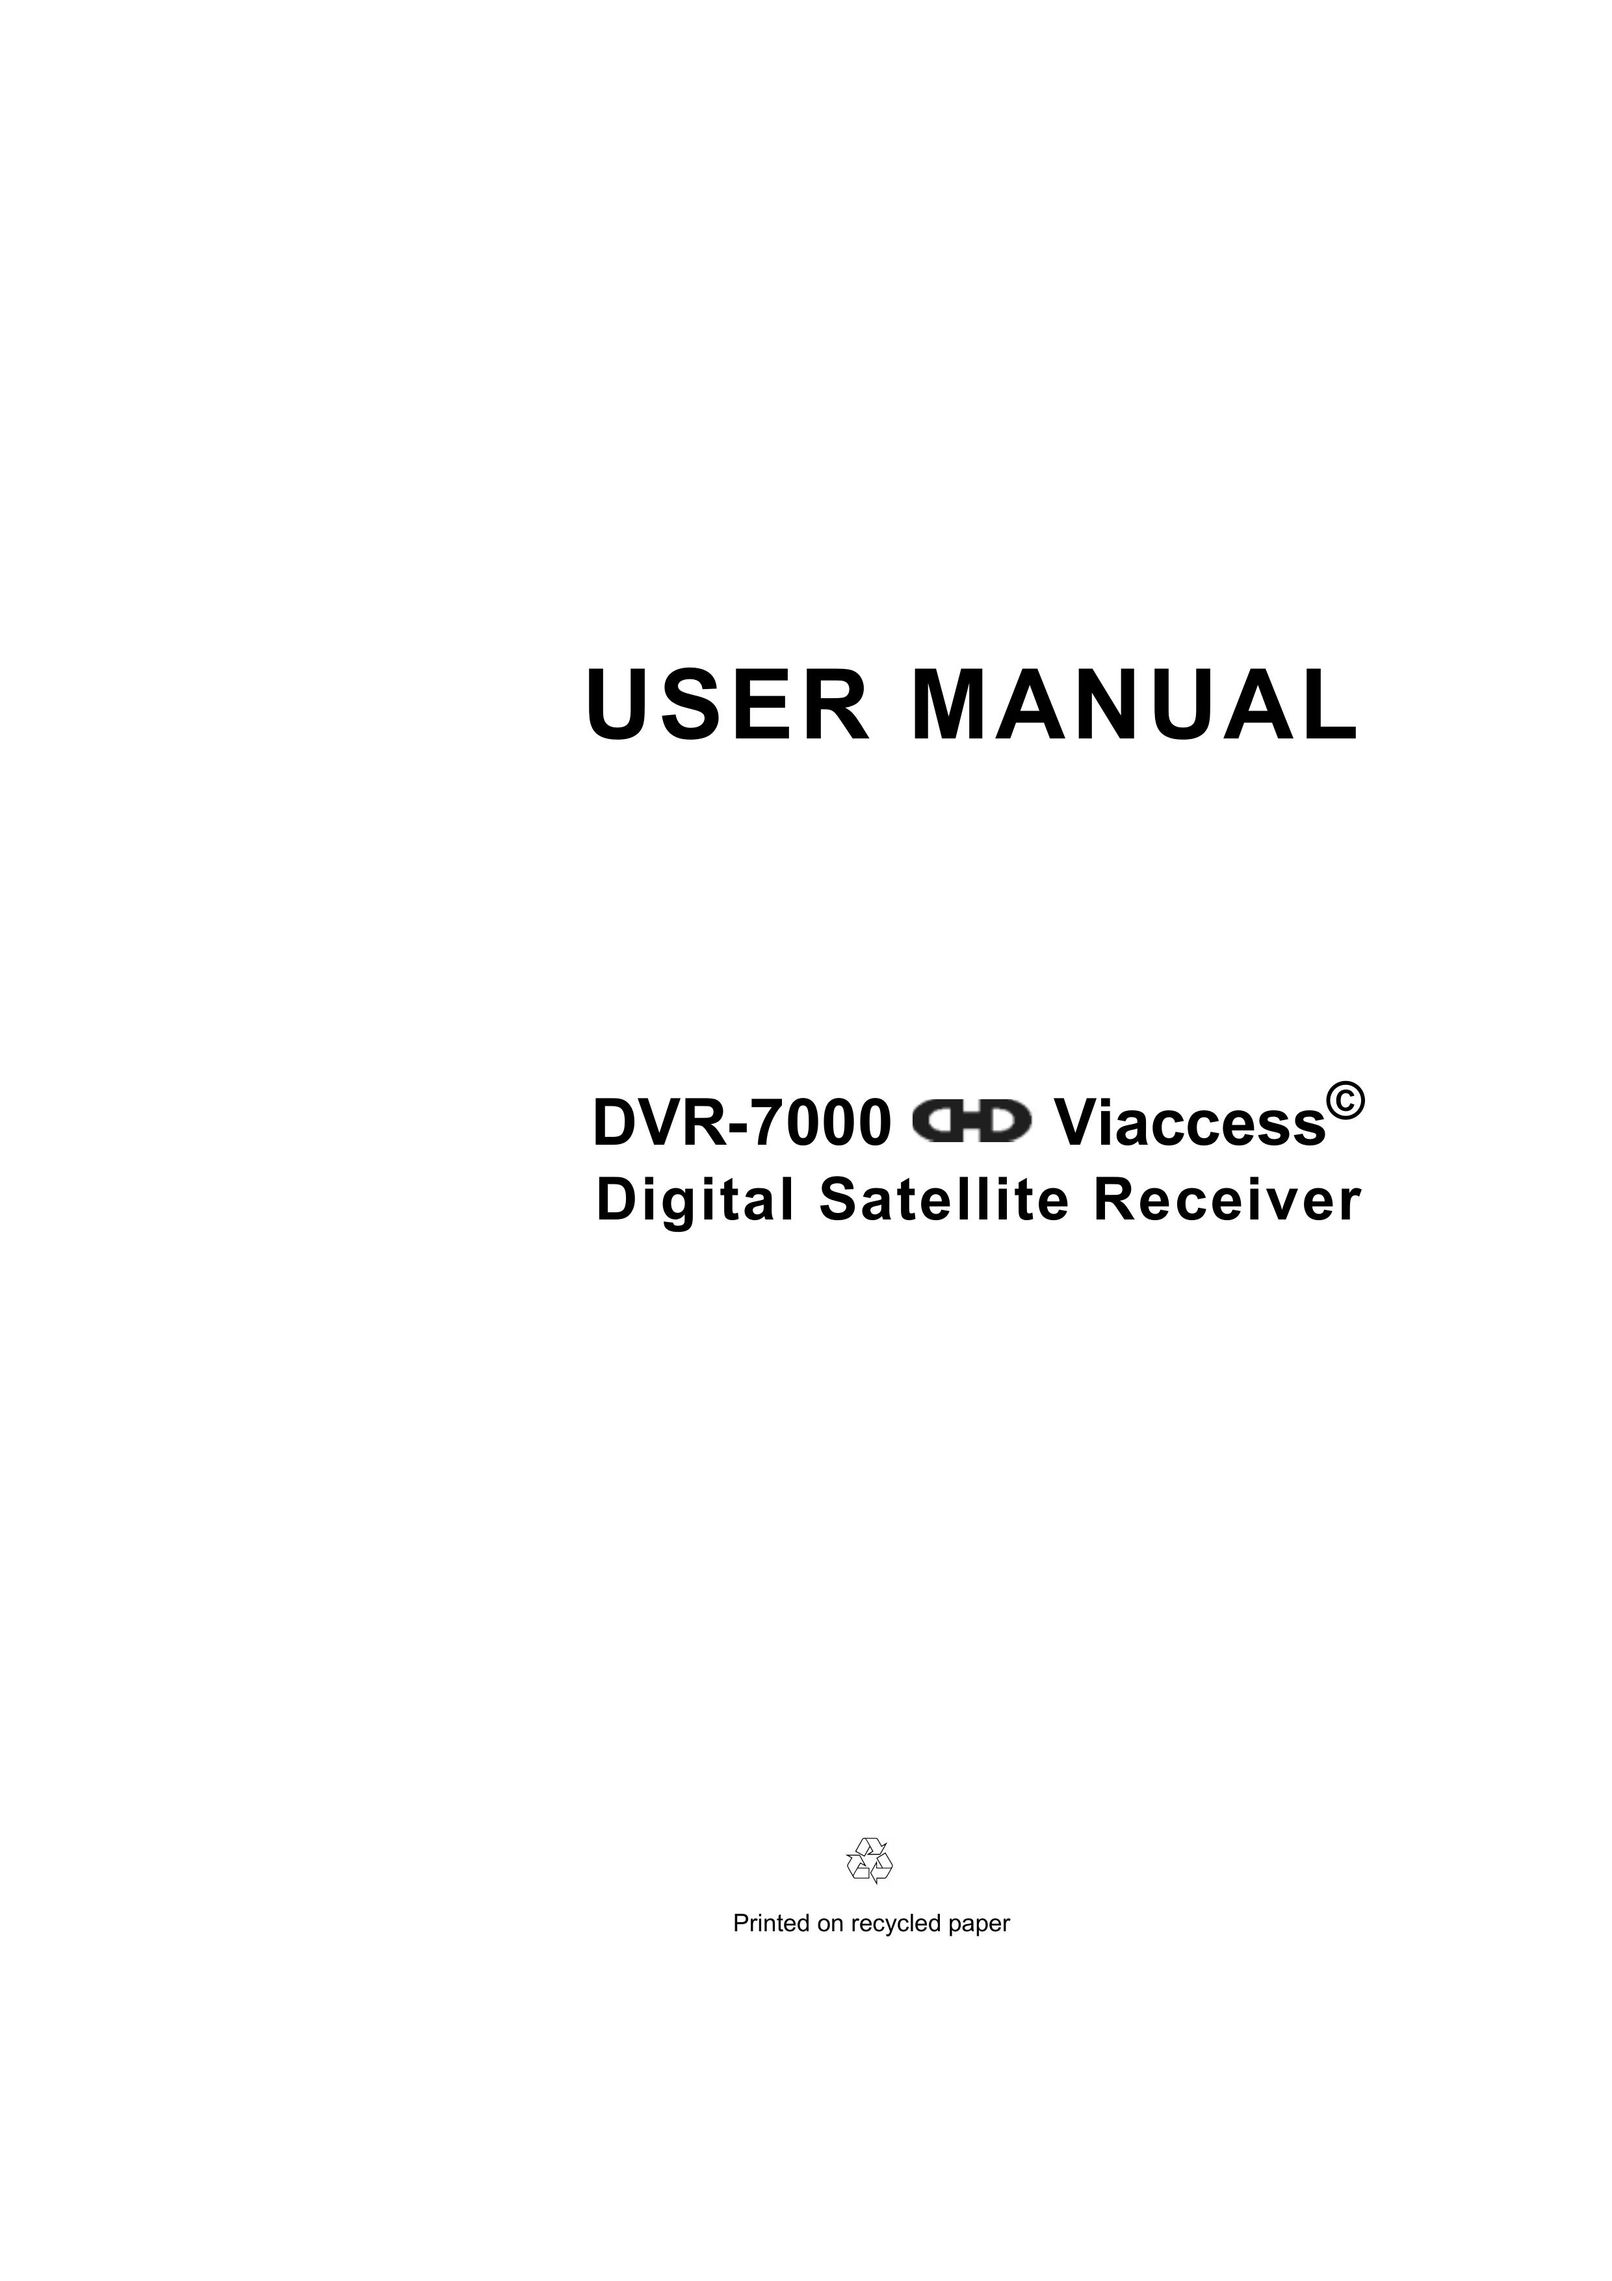 Dish Network DVR-7000 Satellite TV System User Manual